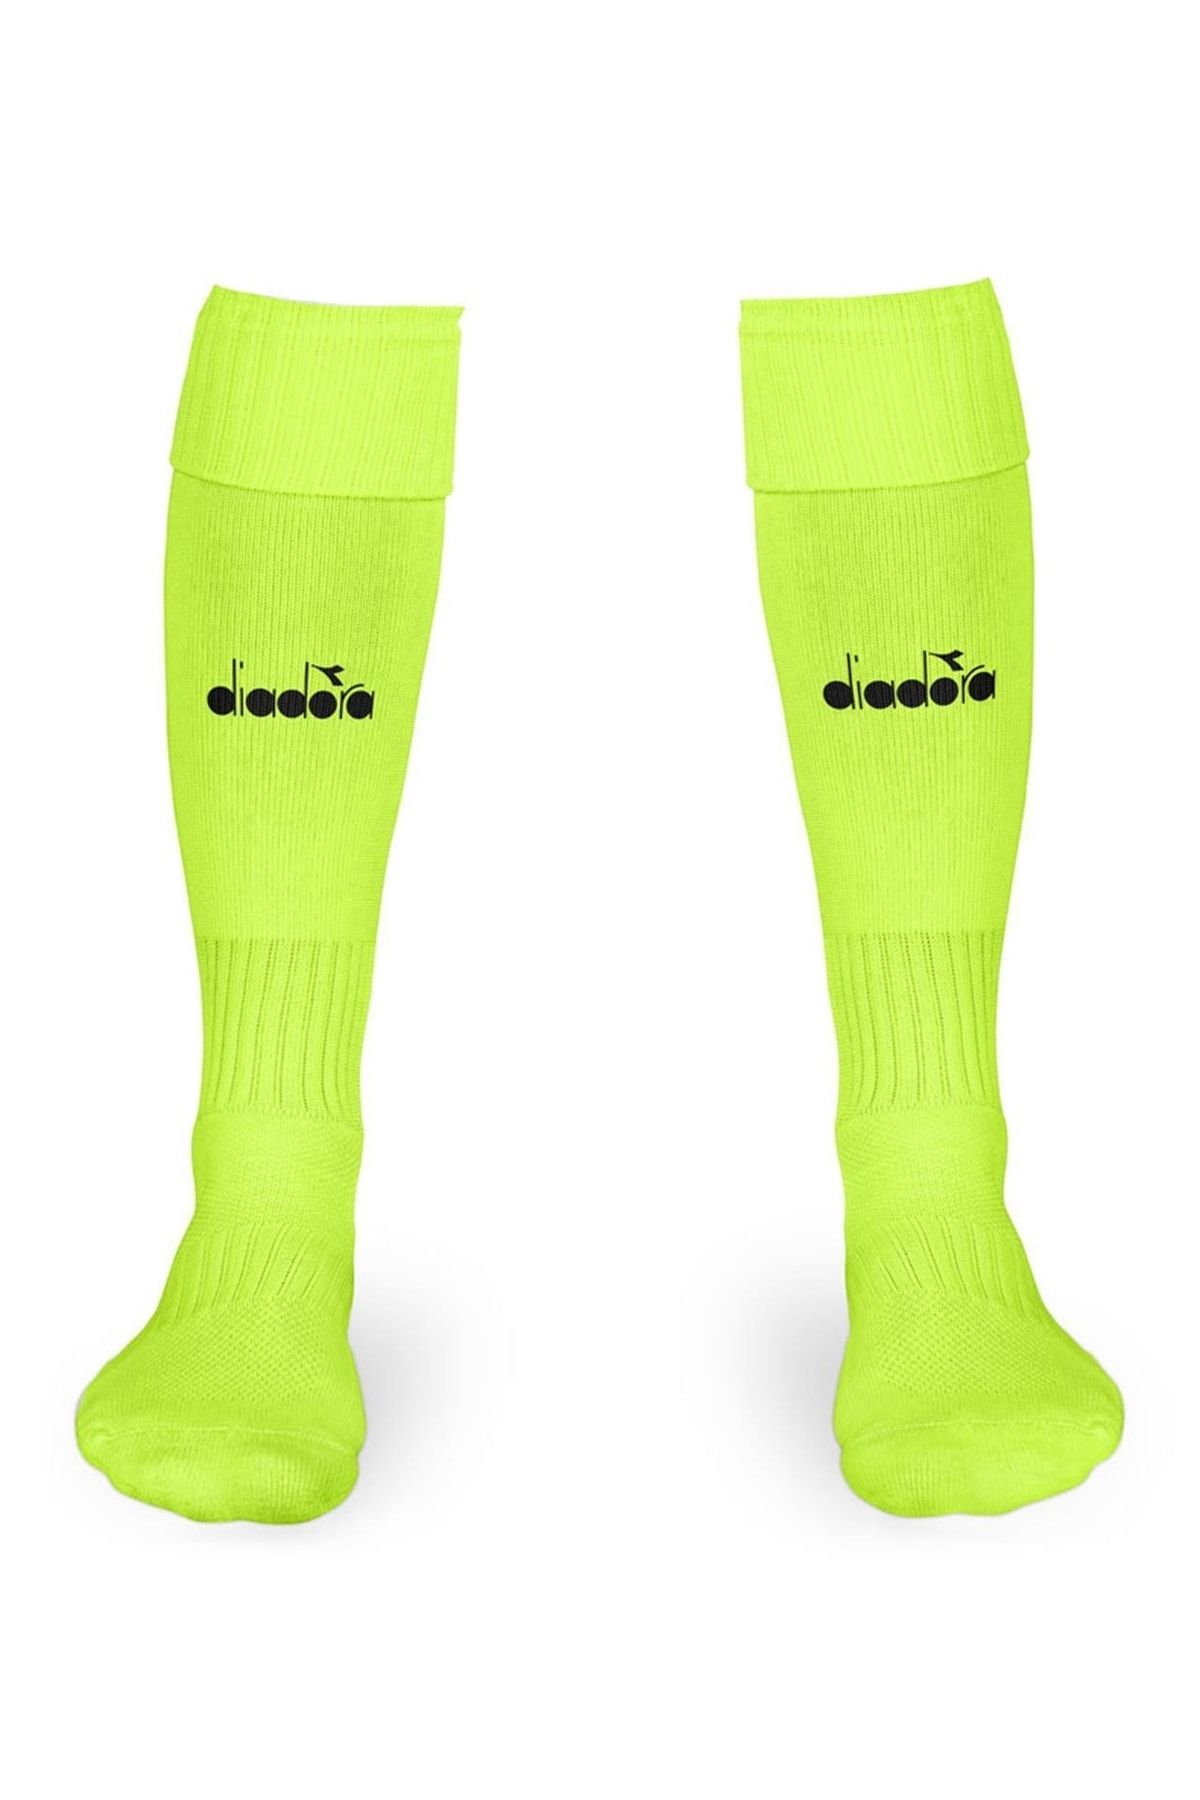 Diadora Orikon Futbol Çorabı Neon Sarı